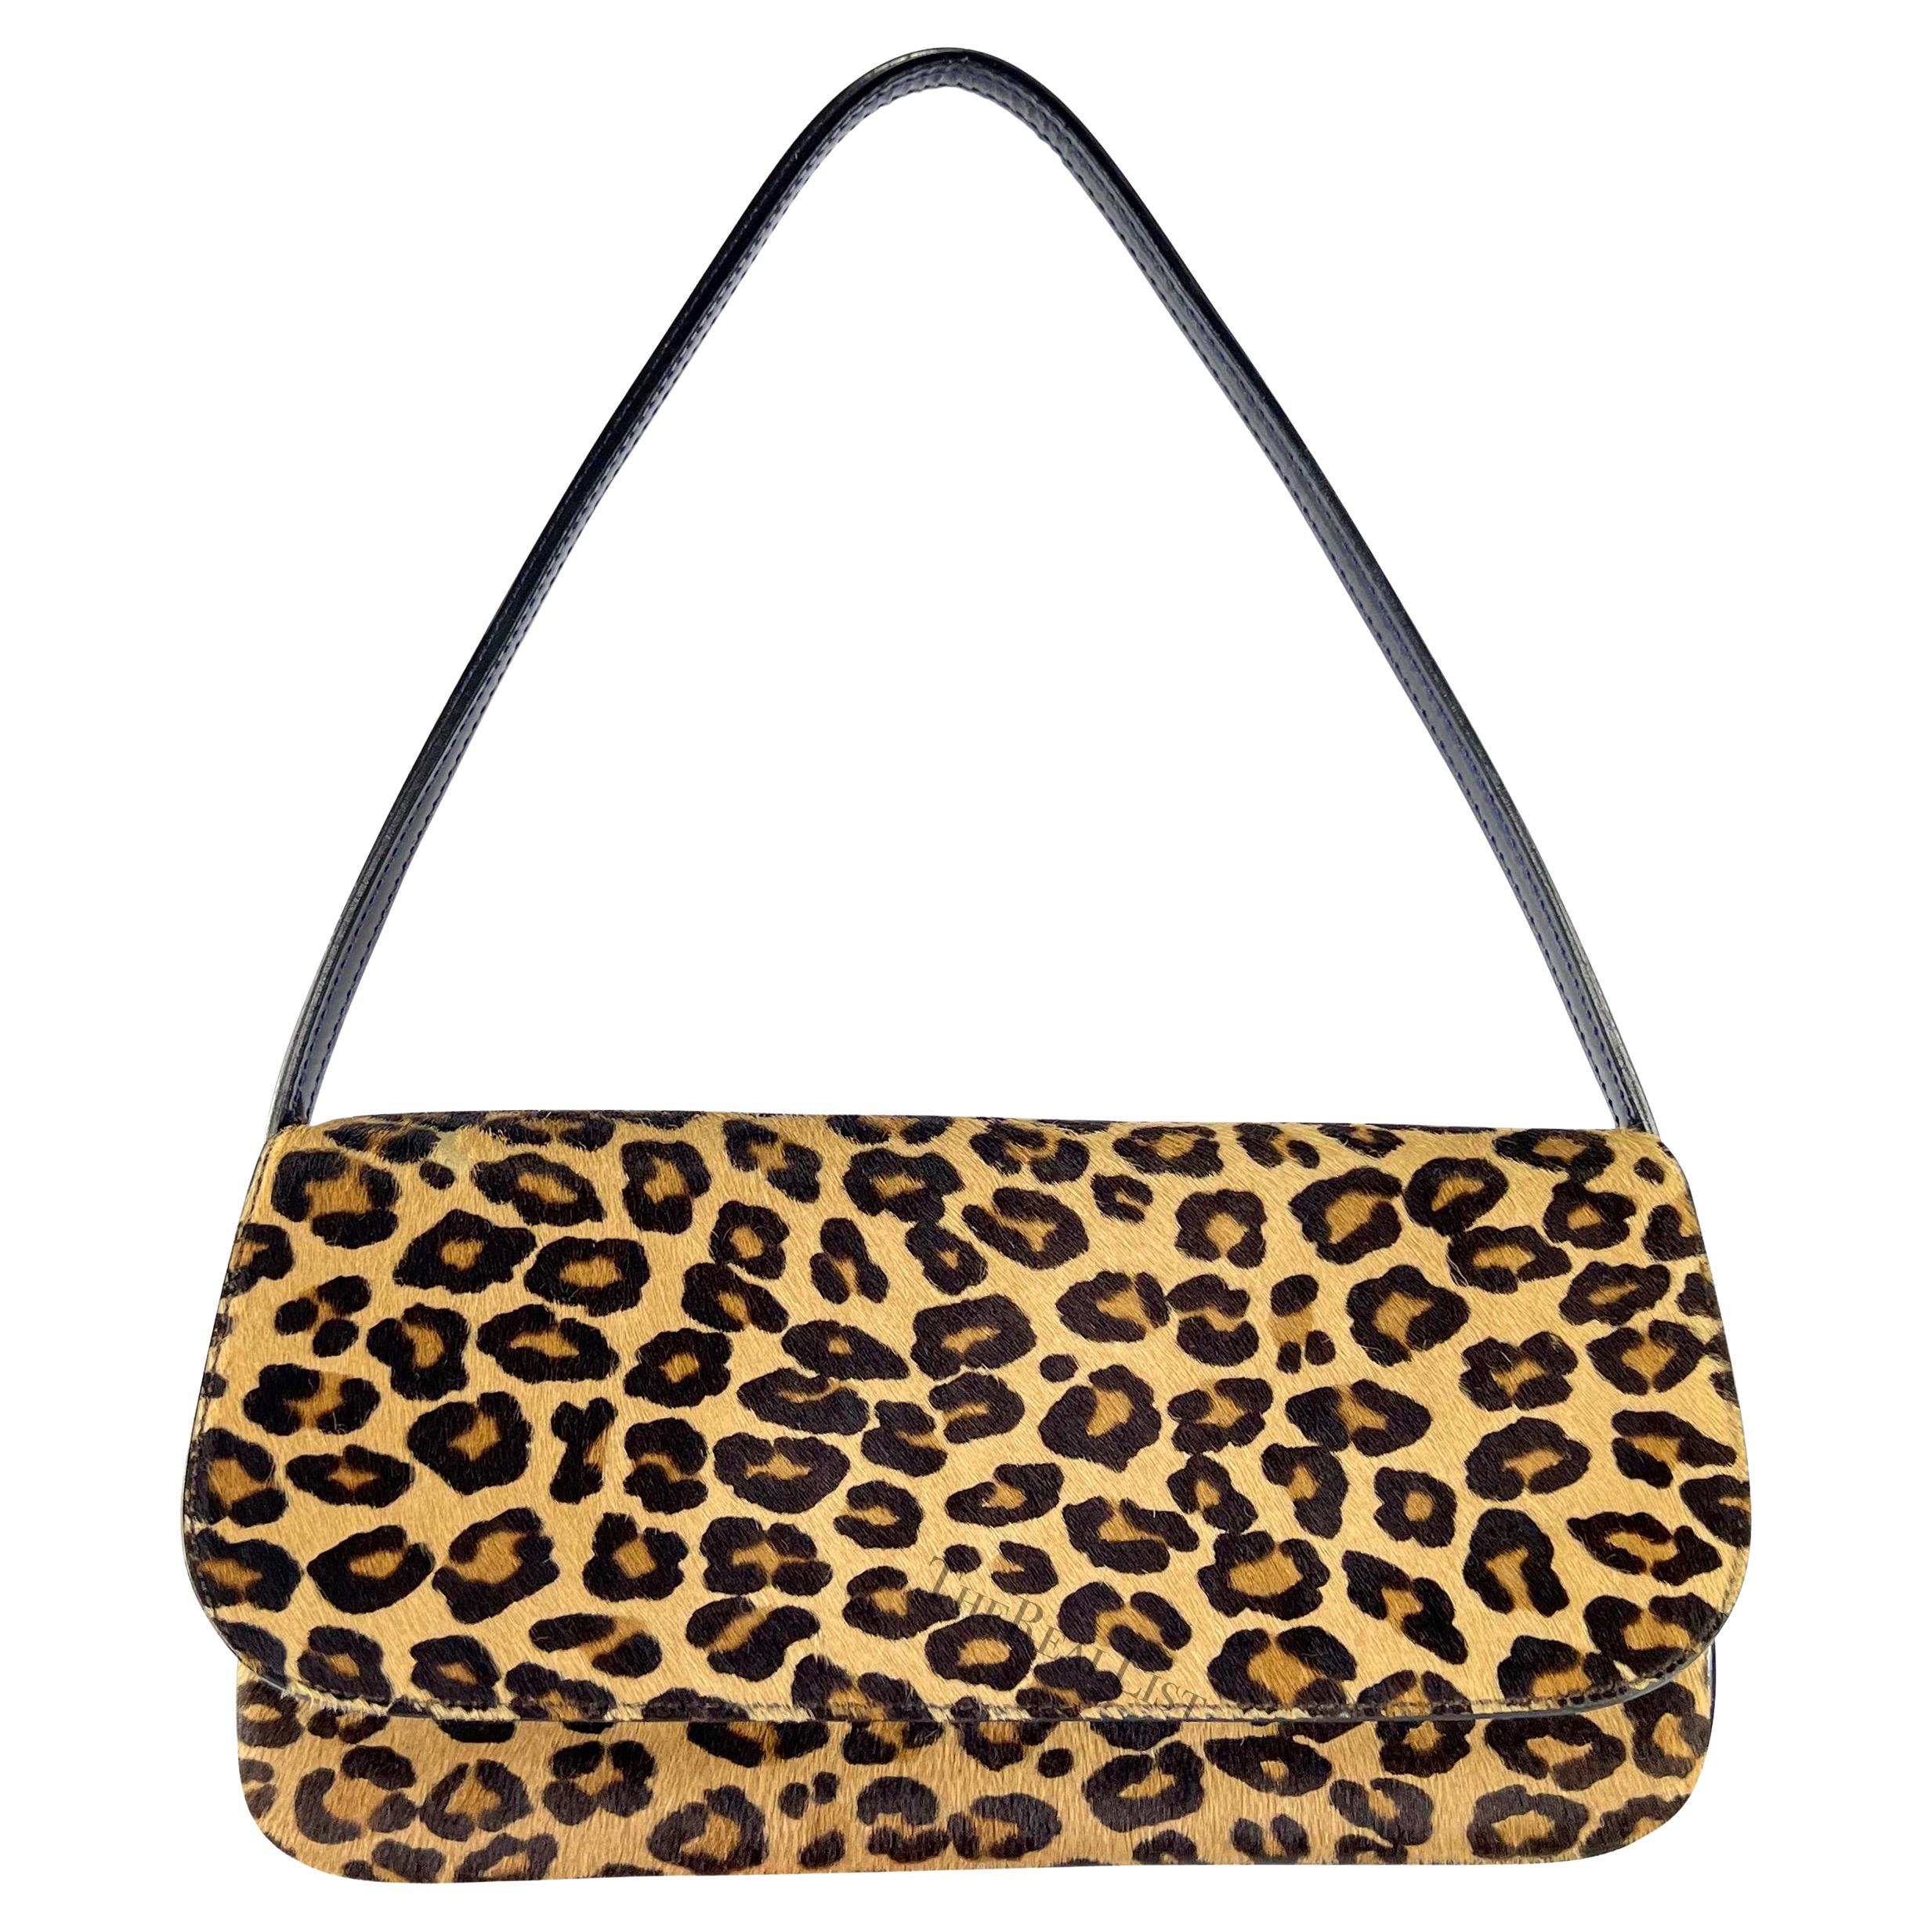 F/W 2000 Dolce & Gabbana Cheetah Print Pony Hair Small Shoulder Bag